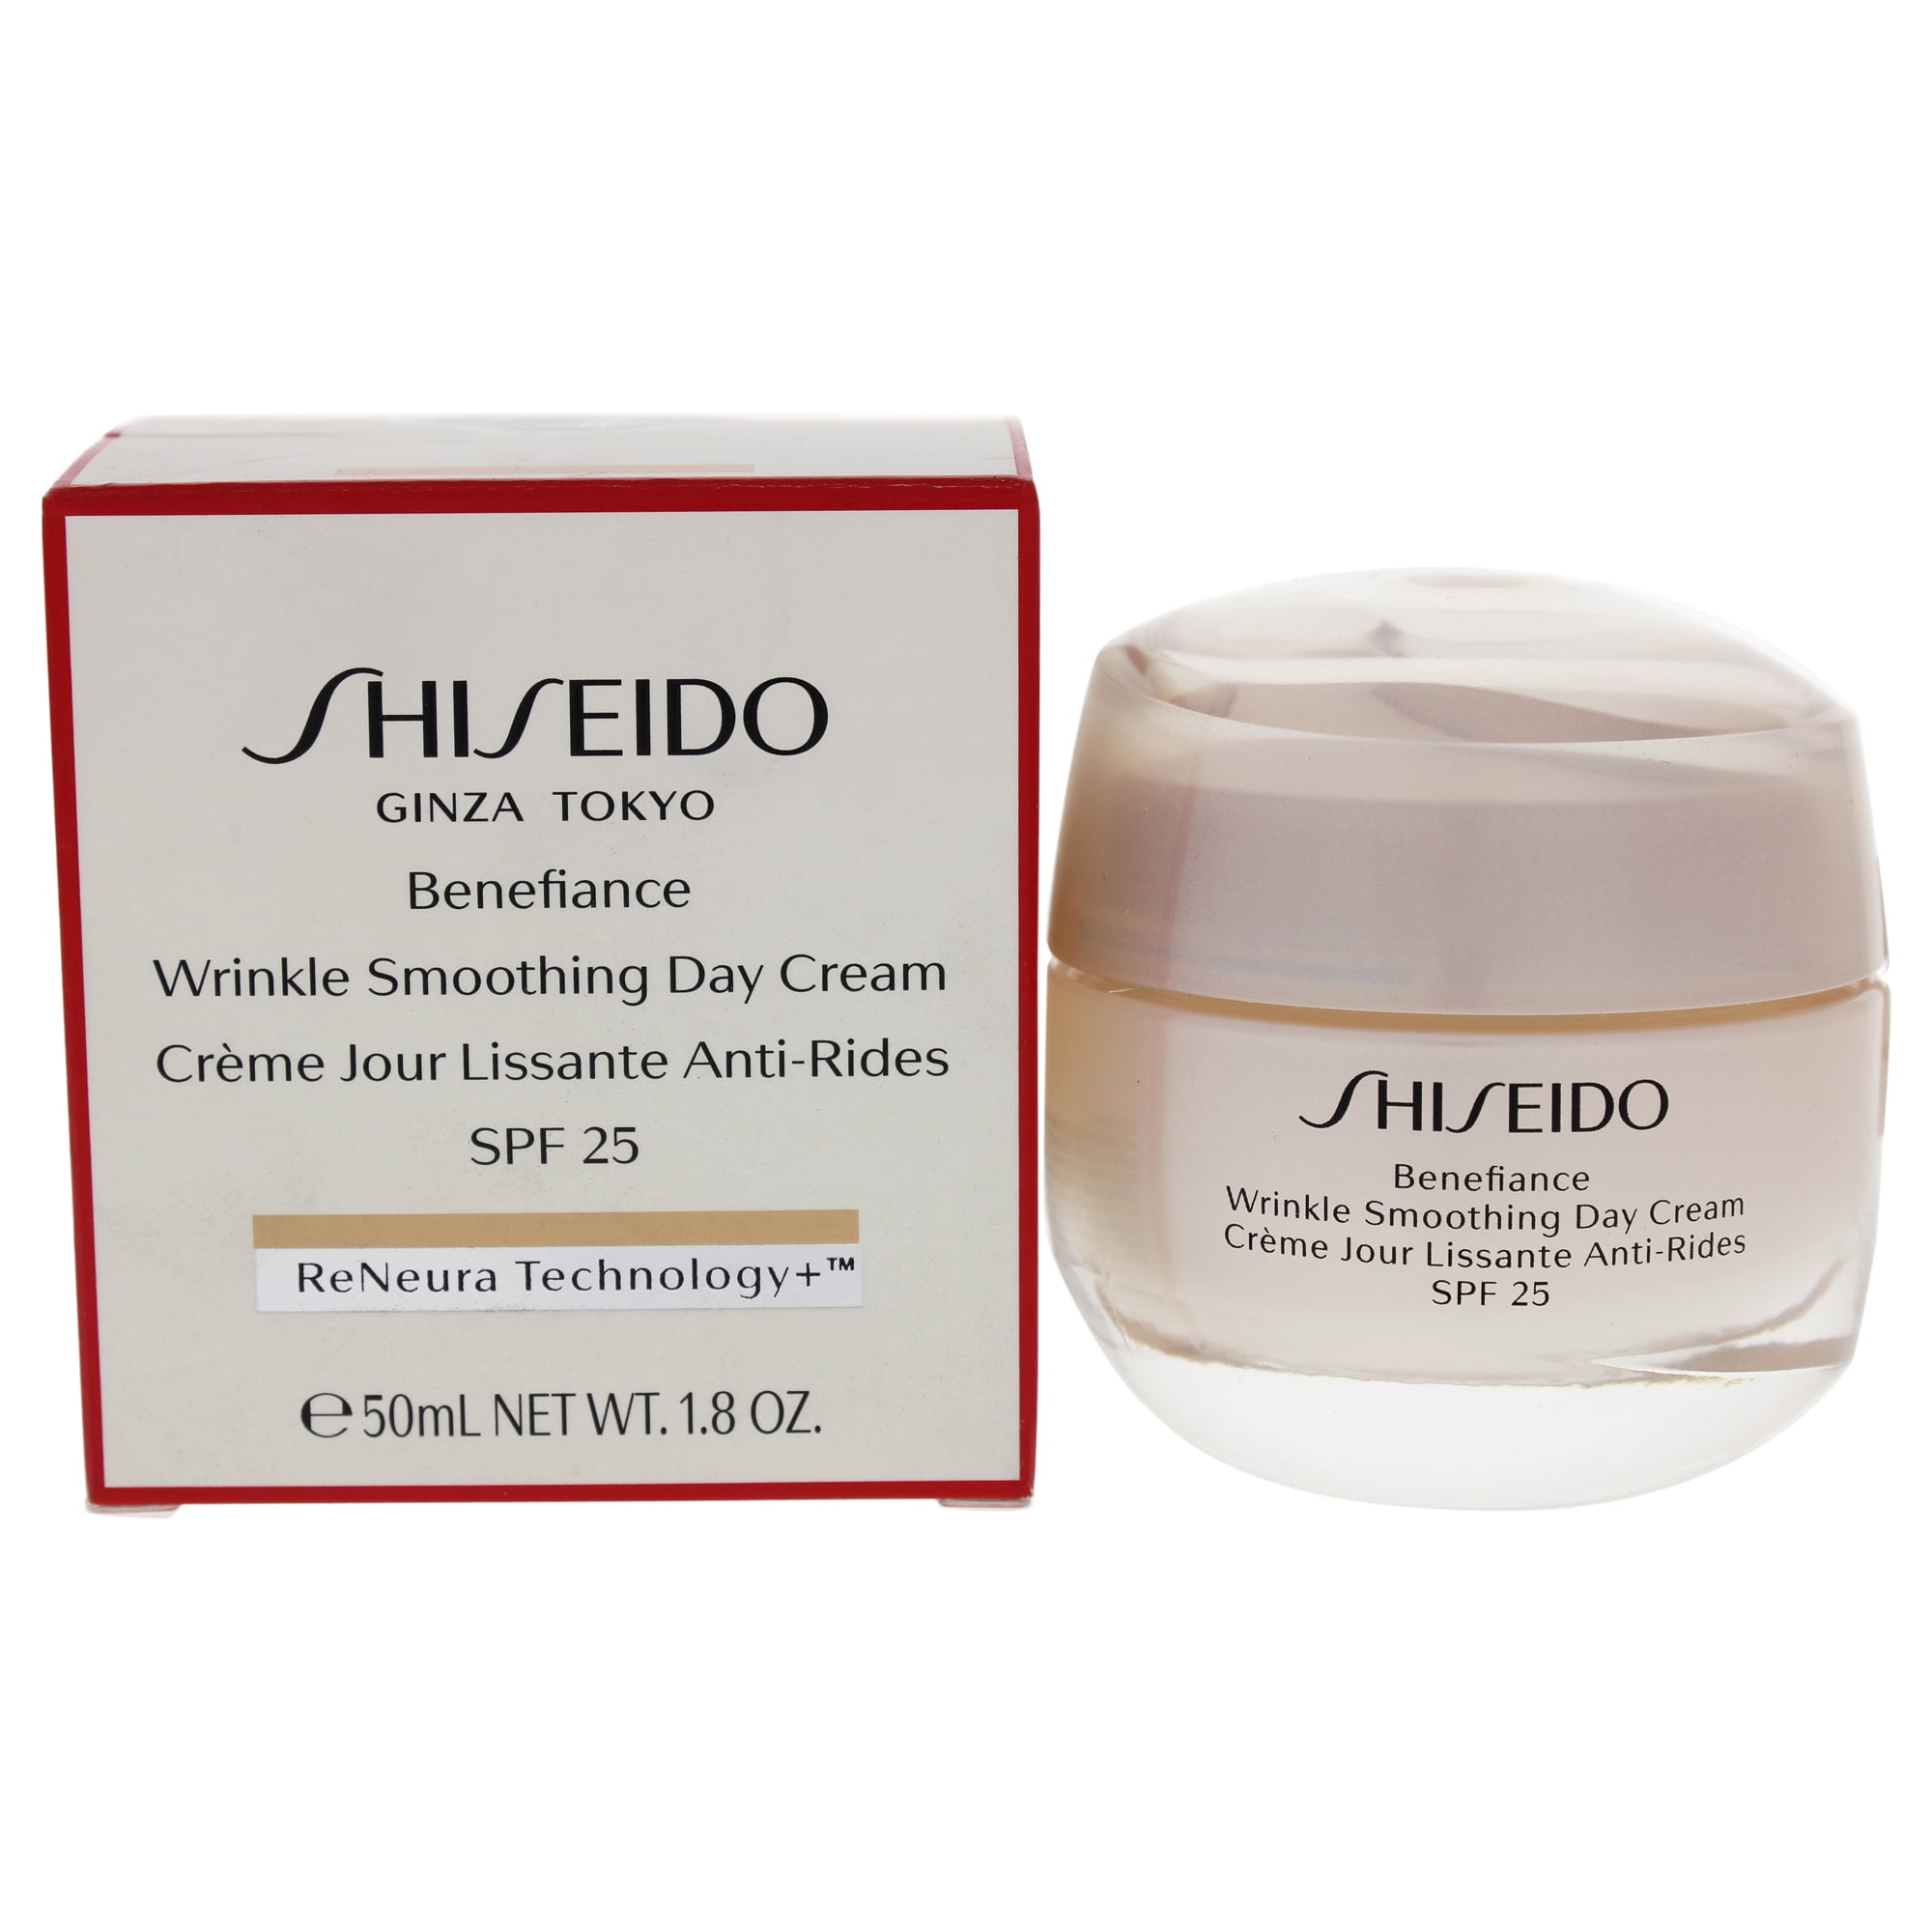 Shiseido wrinkle smoothing. Shiseido Wrinkle Smoothing Cream. Шисейдо Benefiance Wrinkle Smoothing. Shiseido Benefiance Wrinkle Smoothing Cream enriched. Шисейдо Ginza Tokyo Benefiance Wrinkle Smoothing Day Cream 30ml.